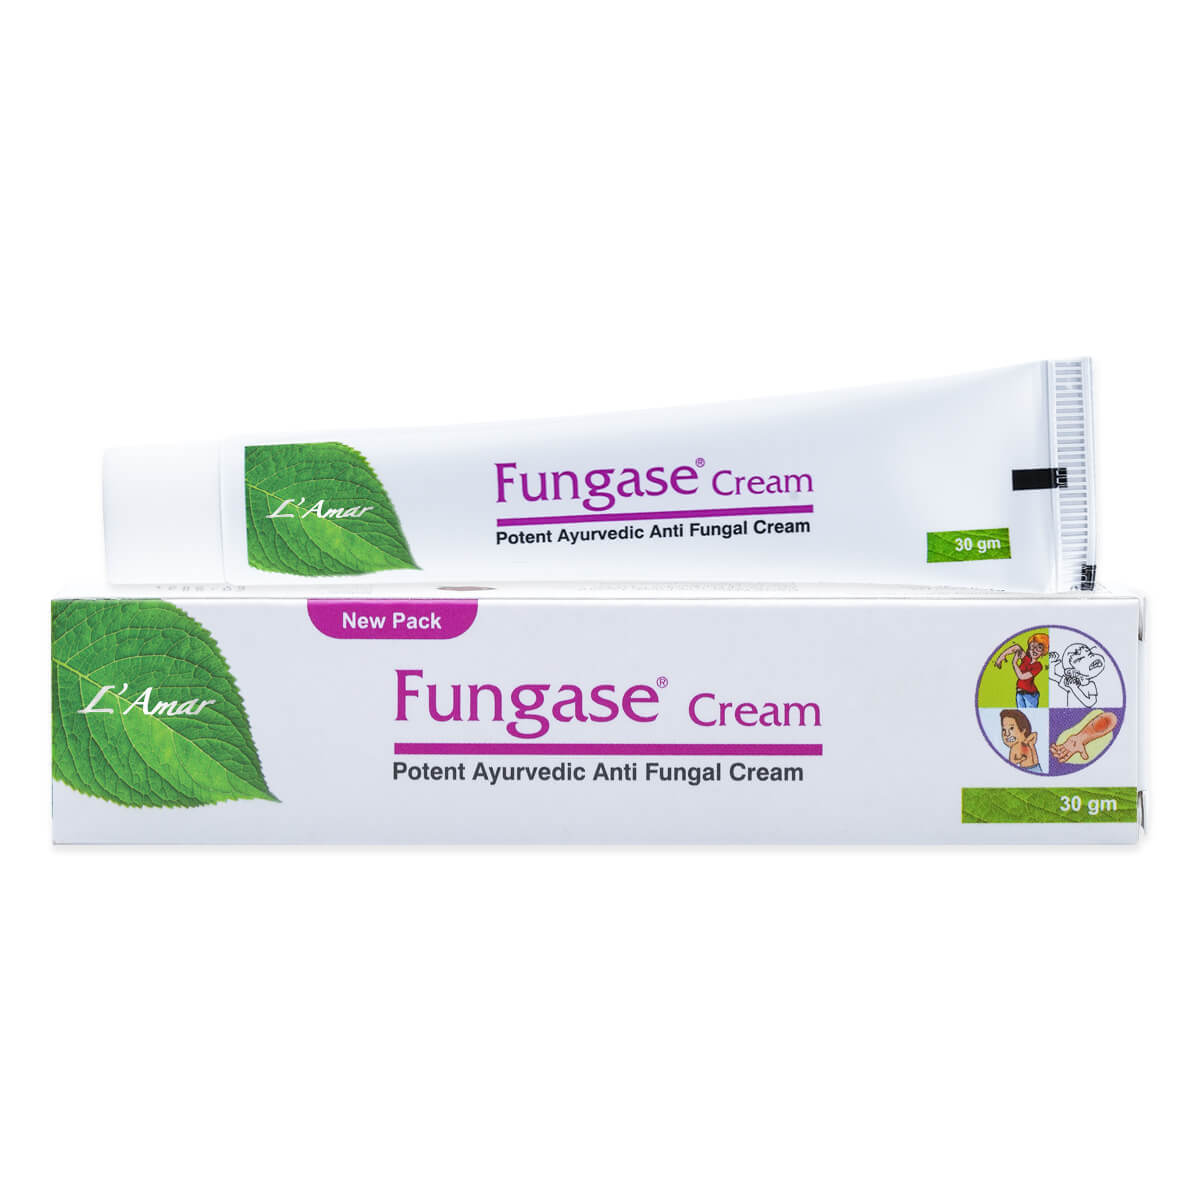 FUNGASE Cream, L'Amar (ФУНГАЗ - аюрведический противогрибковый крем, Ламар), 30 г.